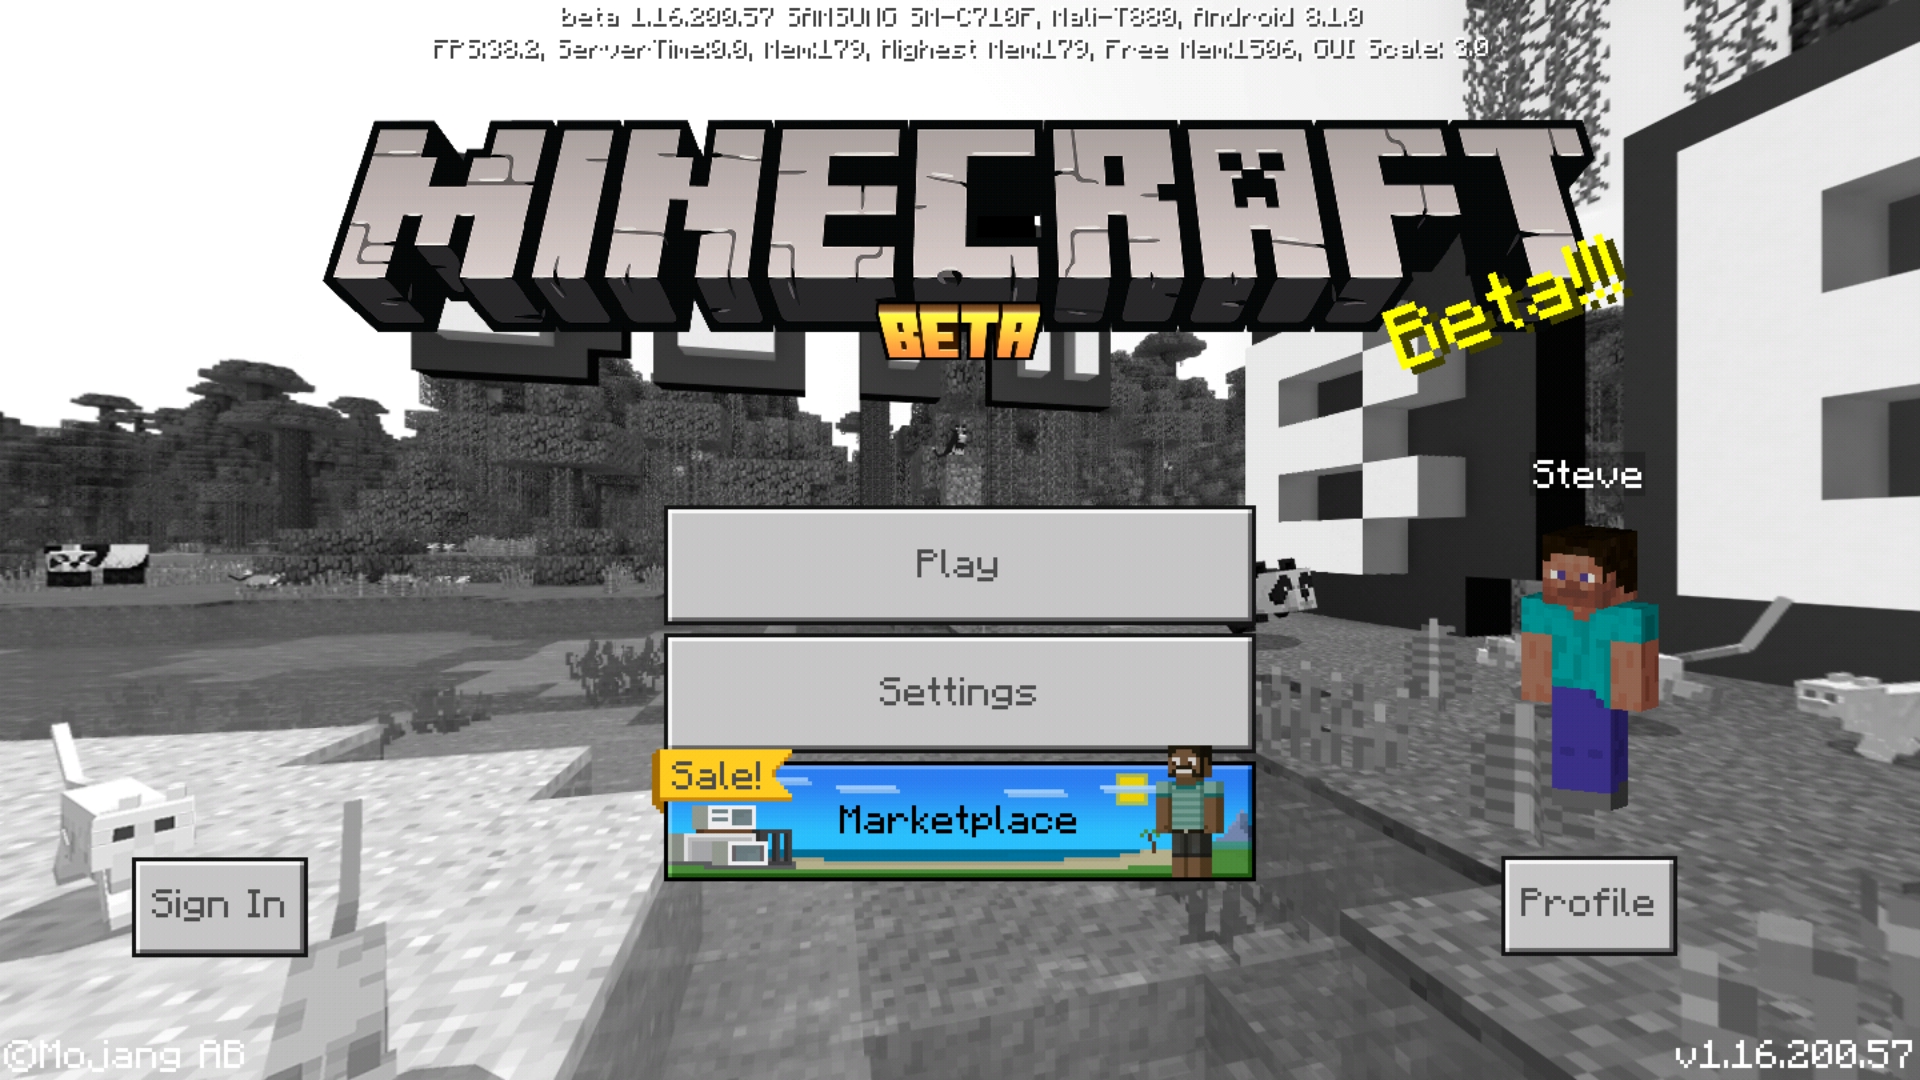 Download Minecraft PE 1.16.100.55 apk free: Nether Update